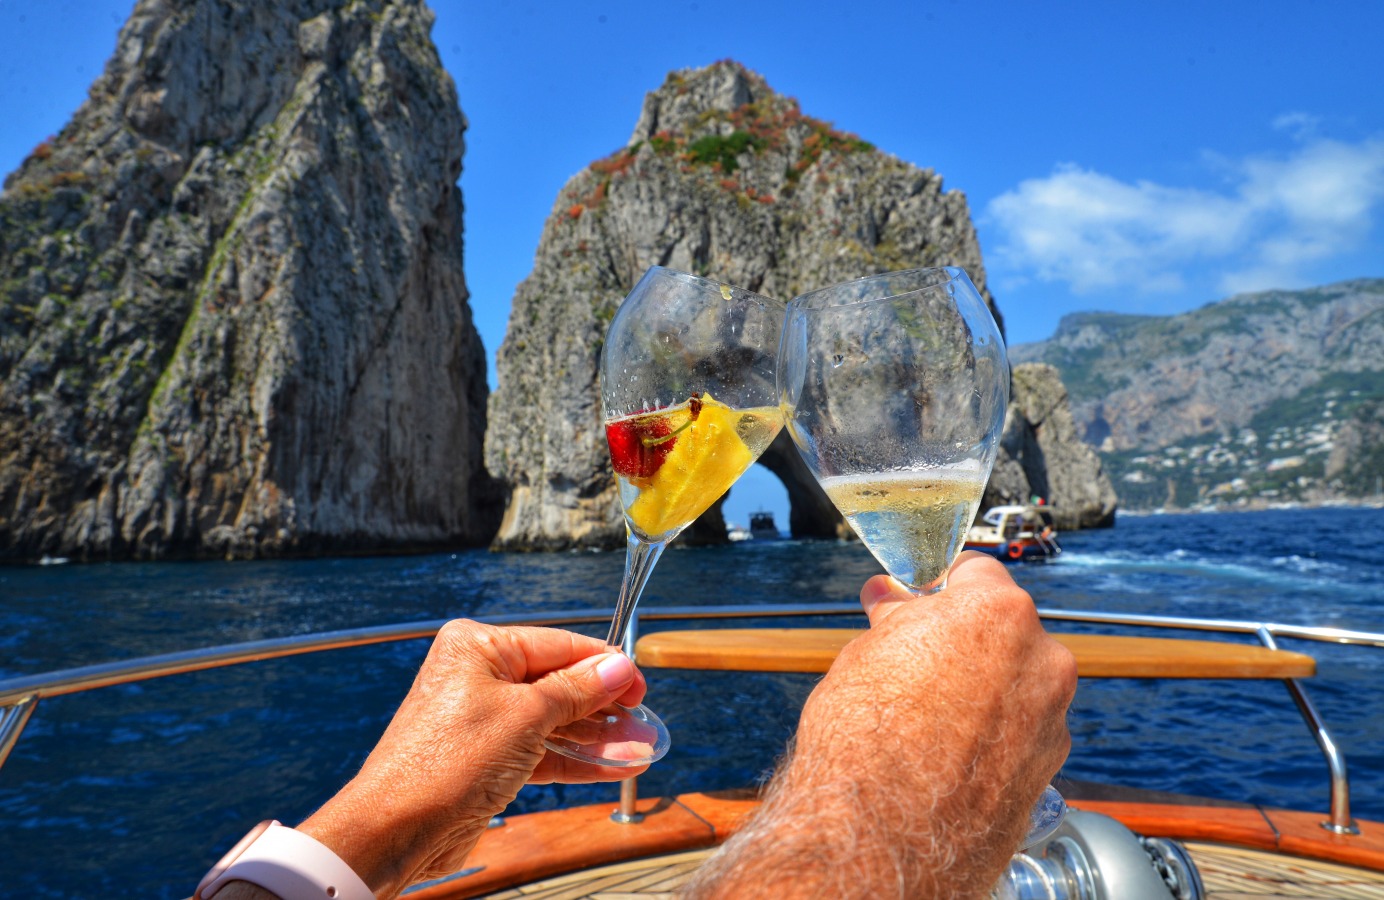 private island of capri boat tour for couples